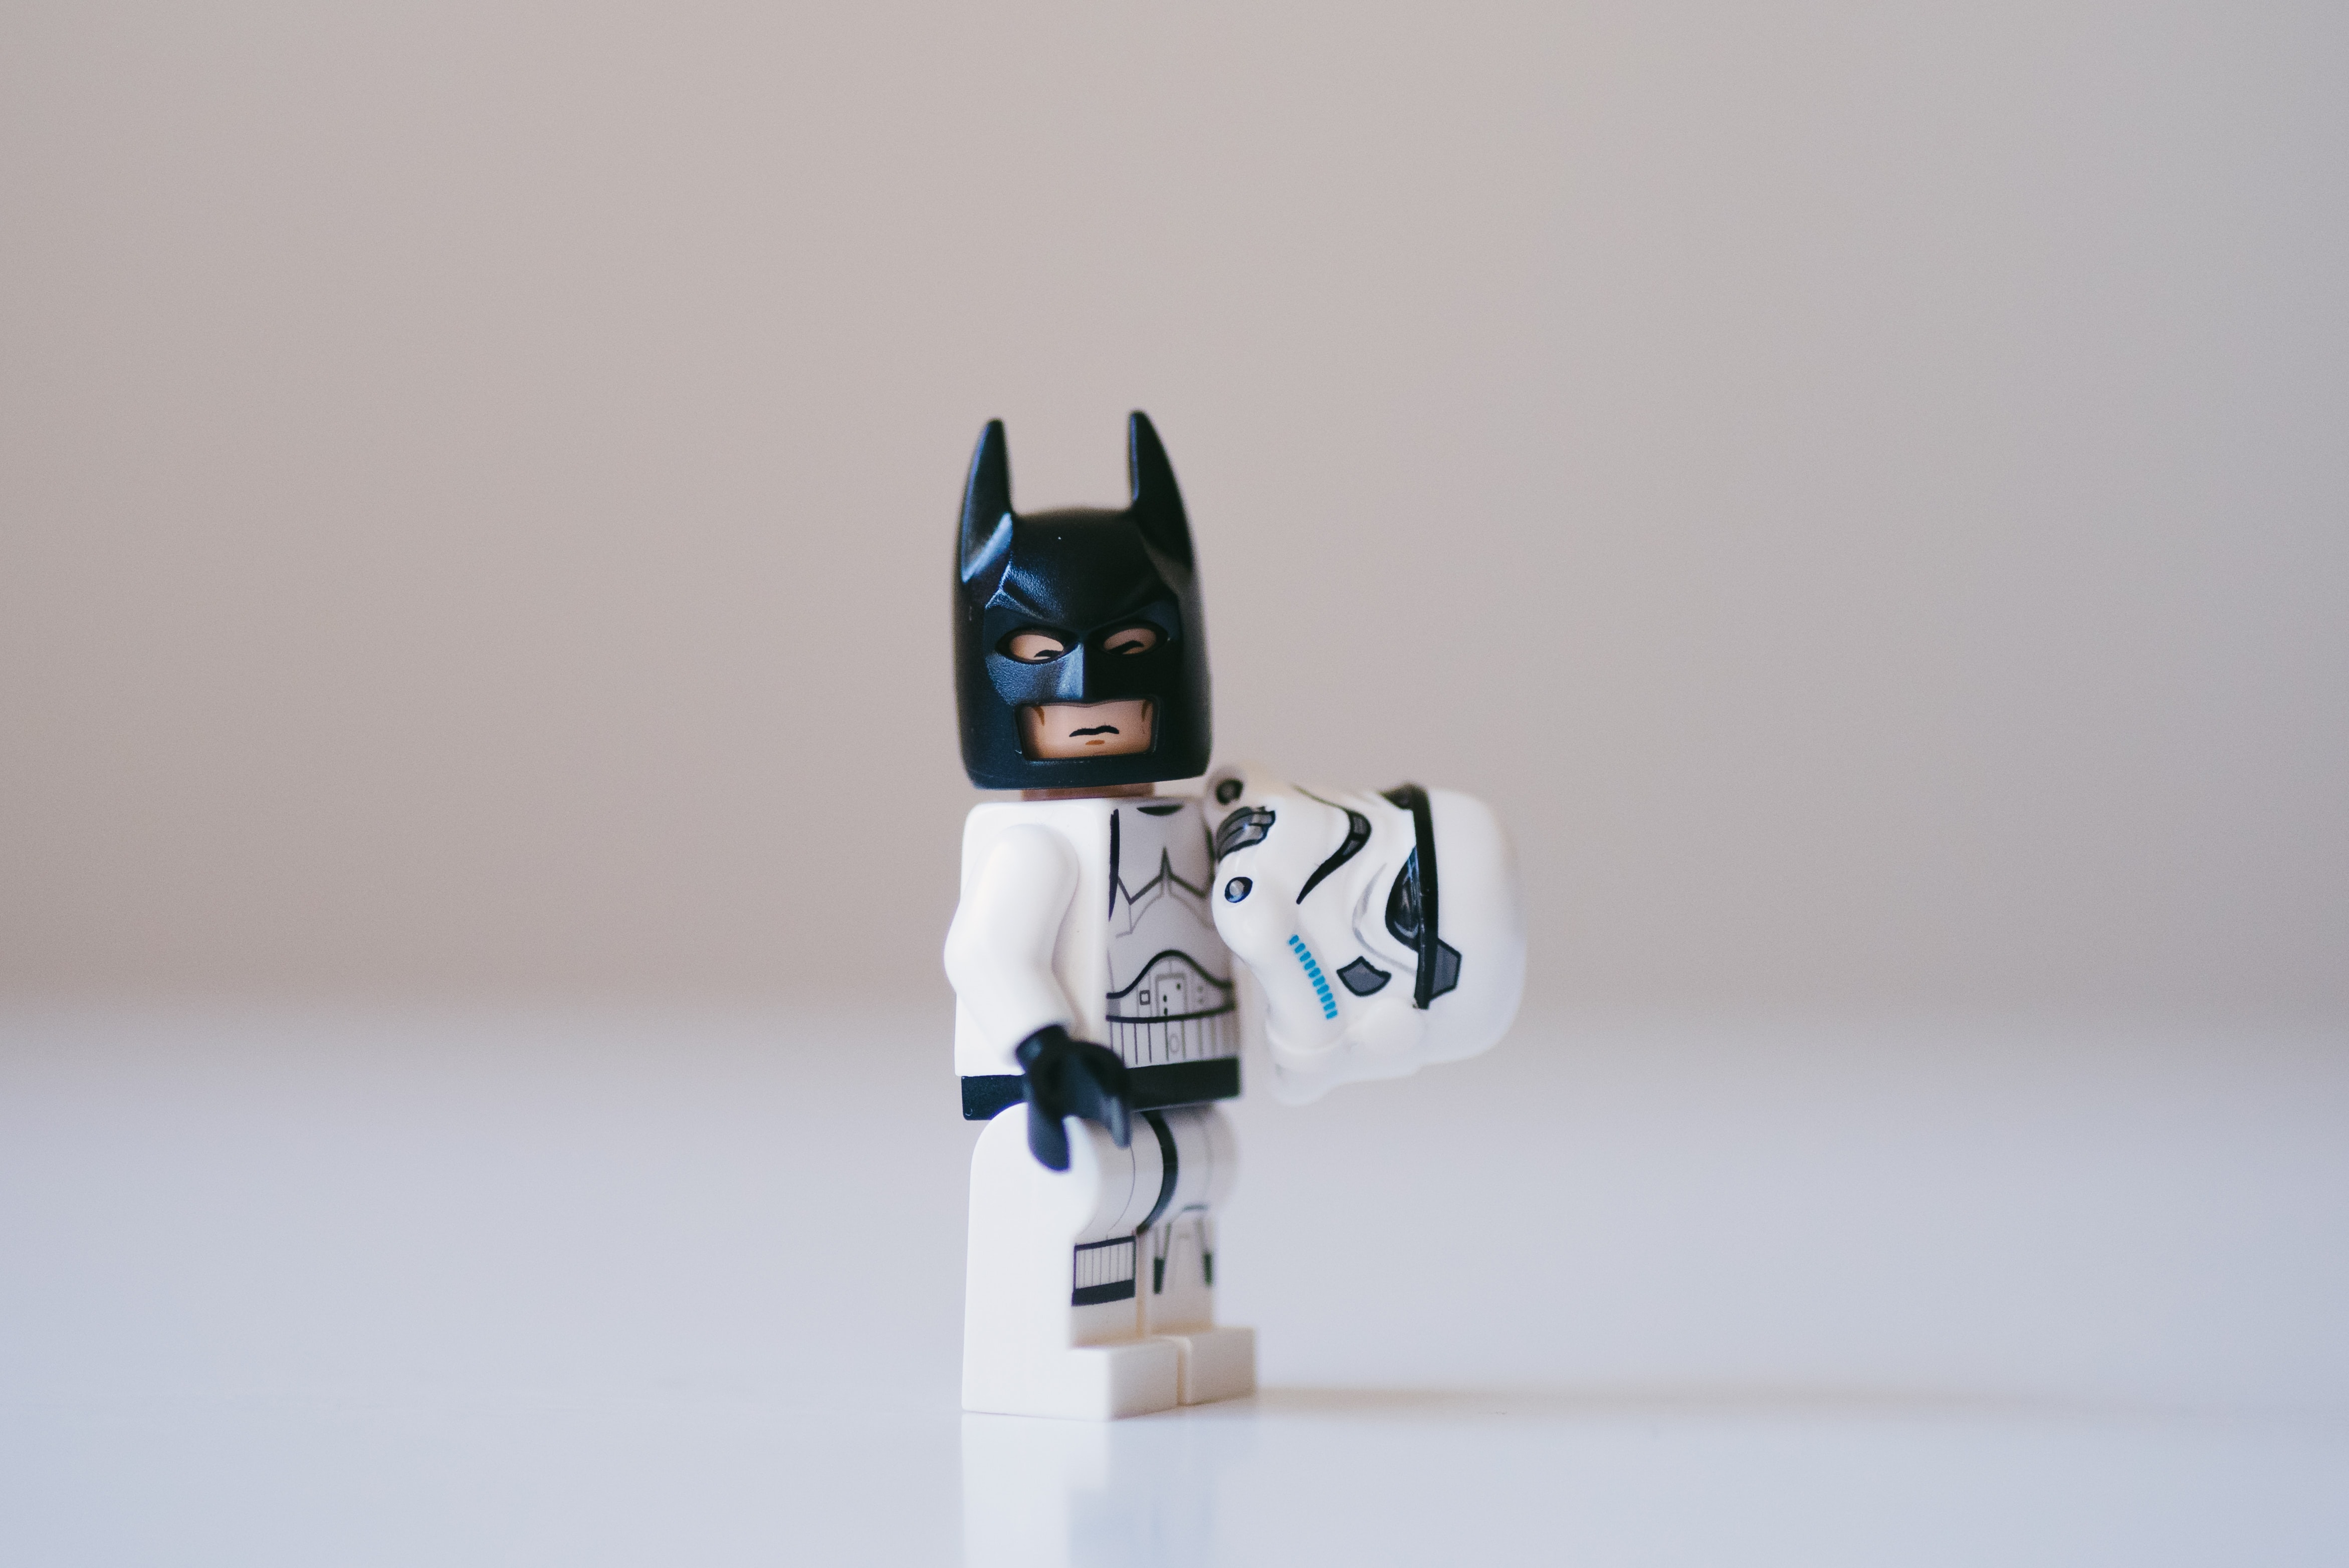 Lego Batman disguised as Lego Stormtrooper